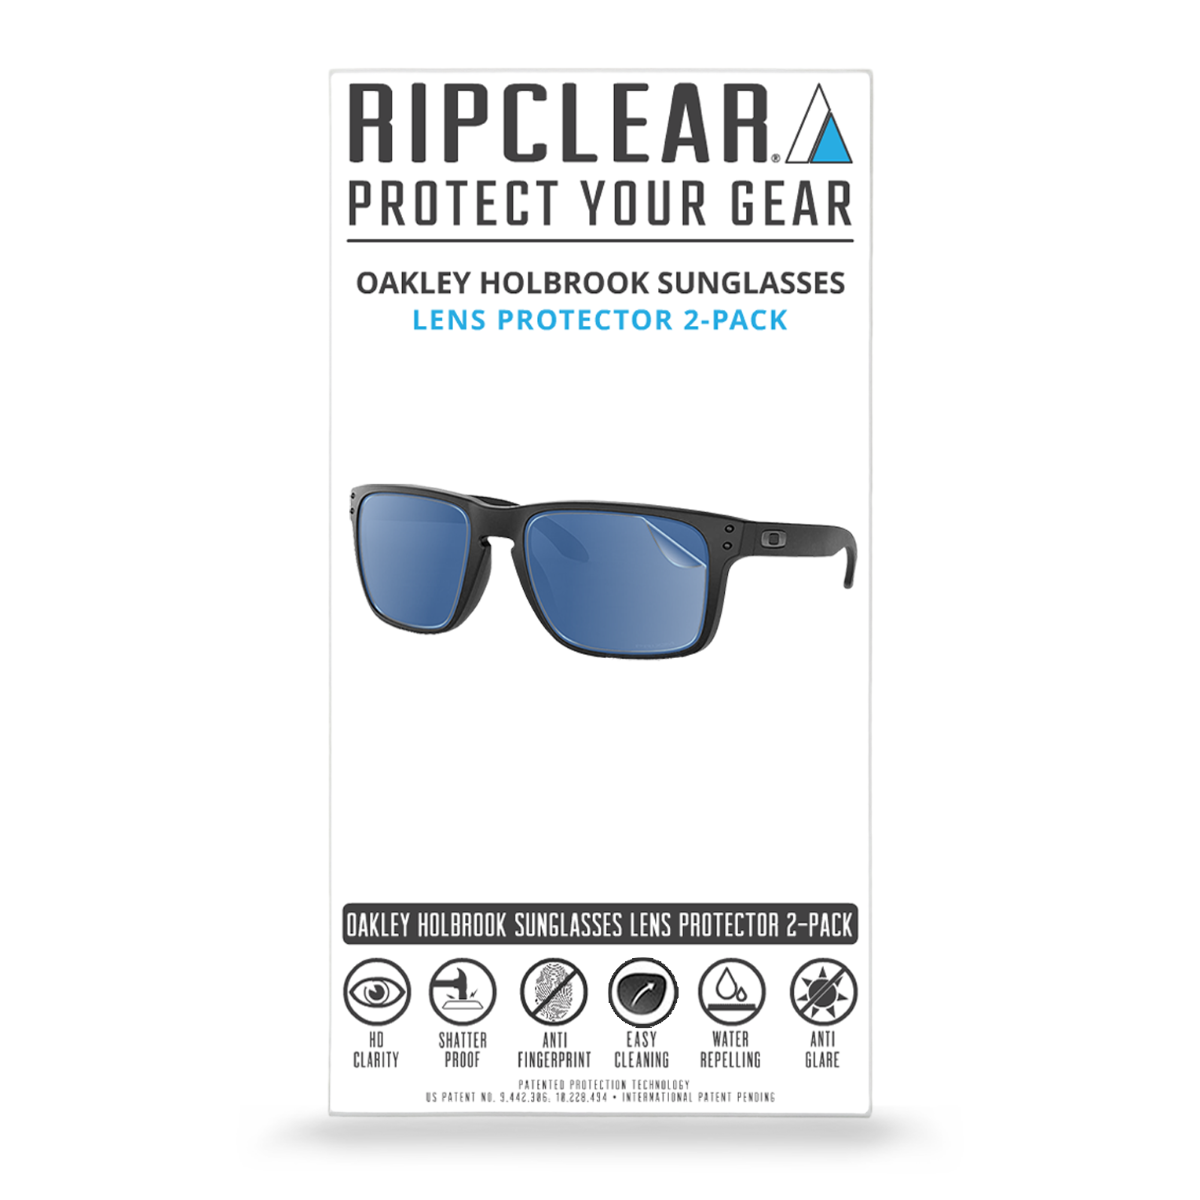 Ripclear Oakley Holbrook Sunglass Lens Protectors - 2 Pack